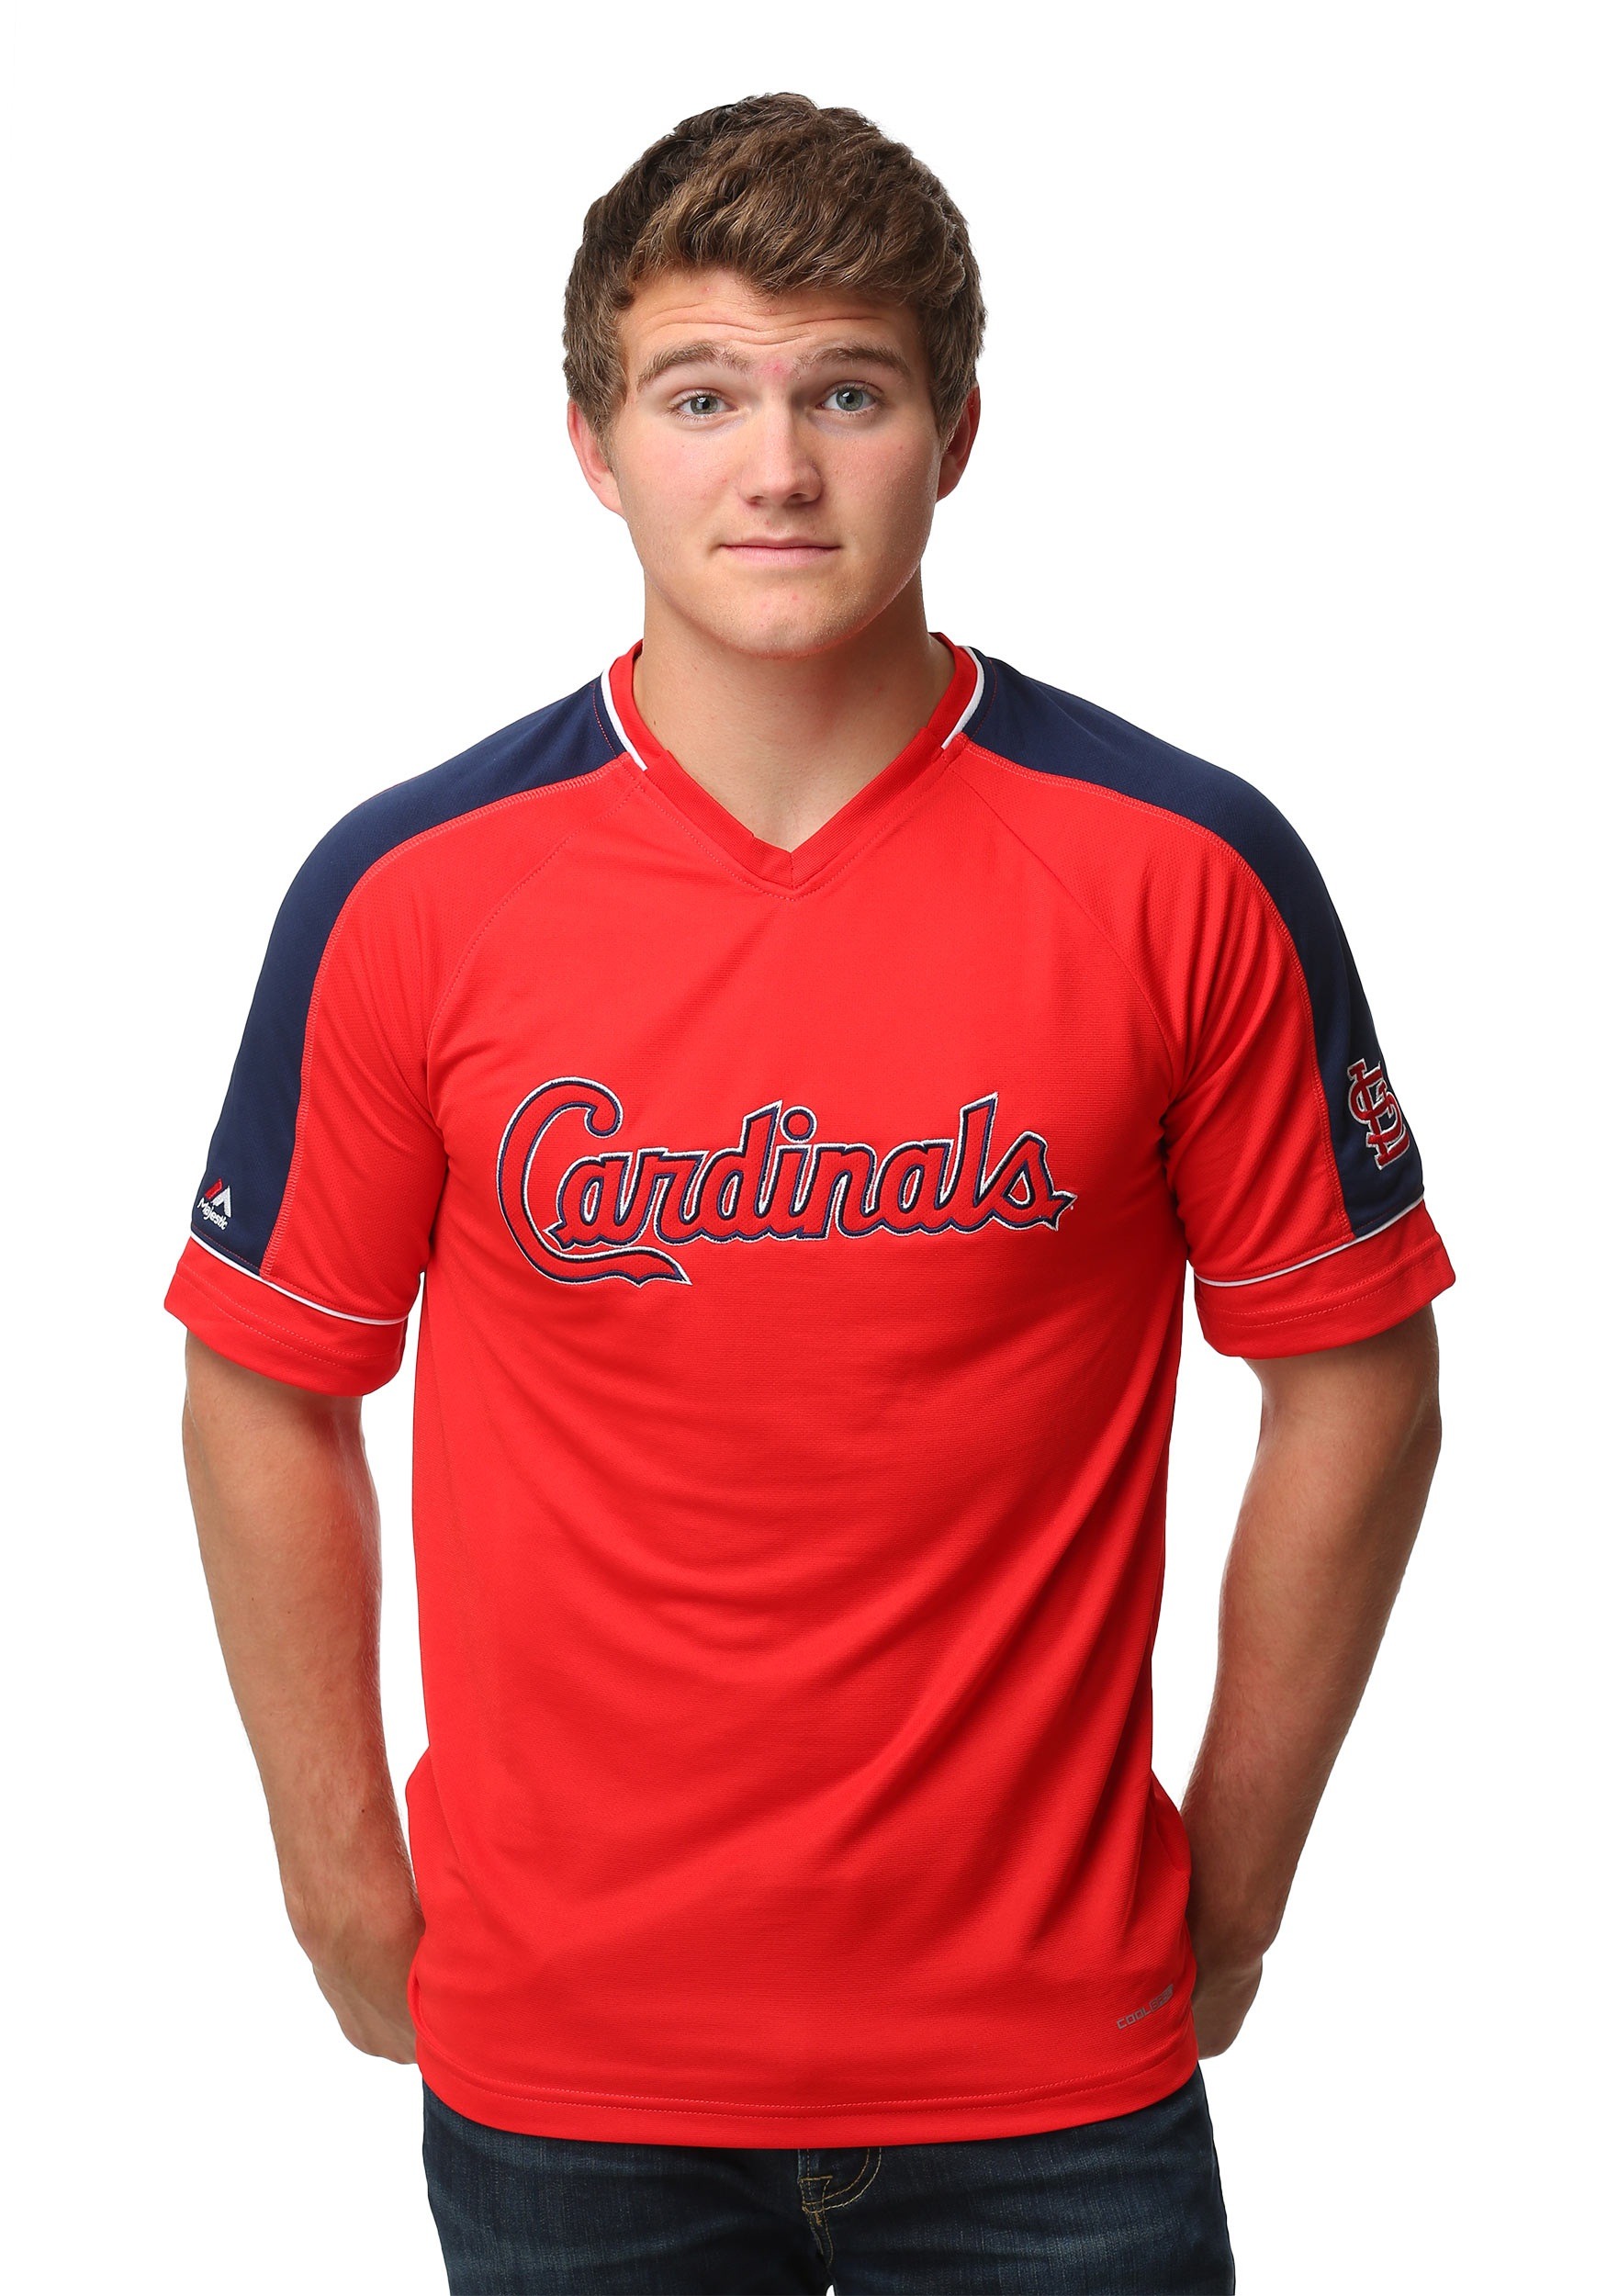 cardinals central division shirt